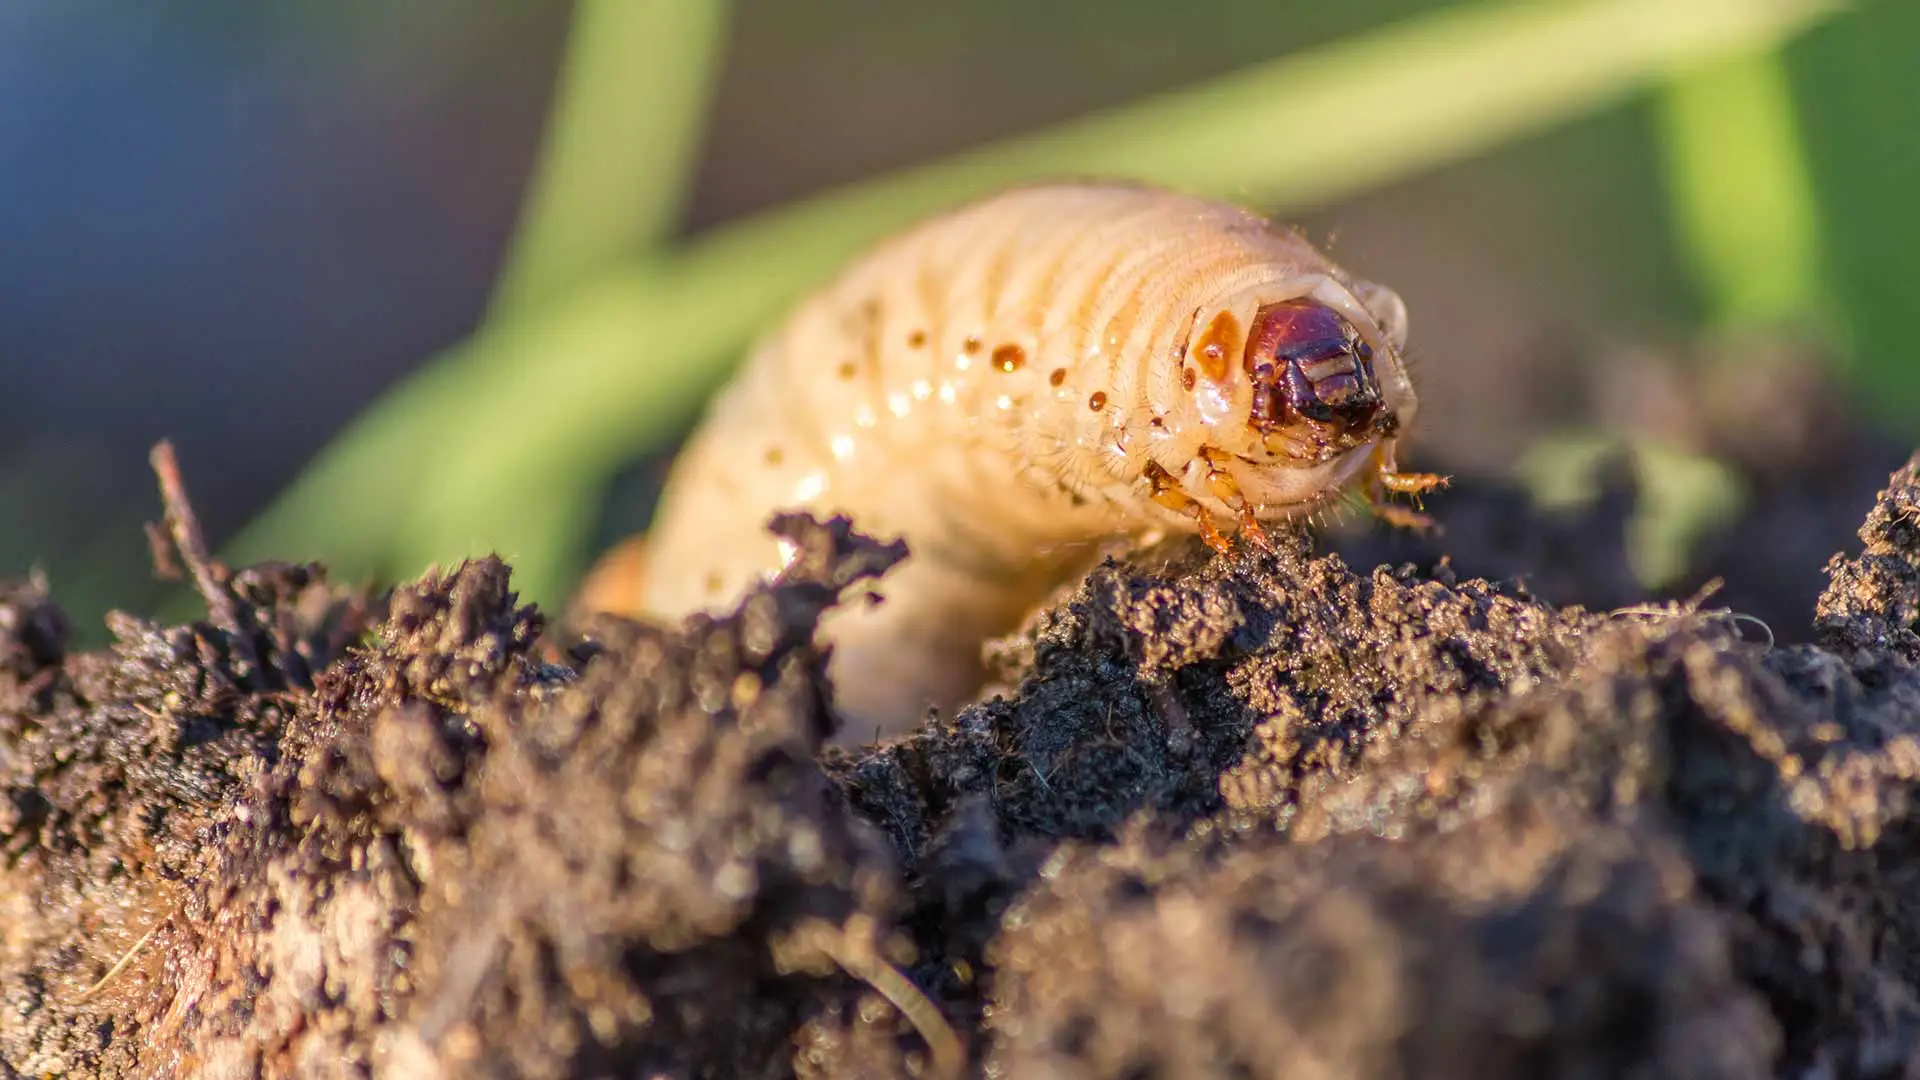 Close up photo of a lawn grub worm near Allentown, Pennsylvania.